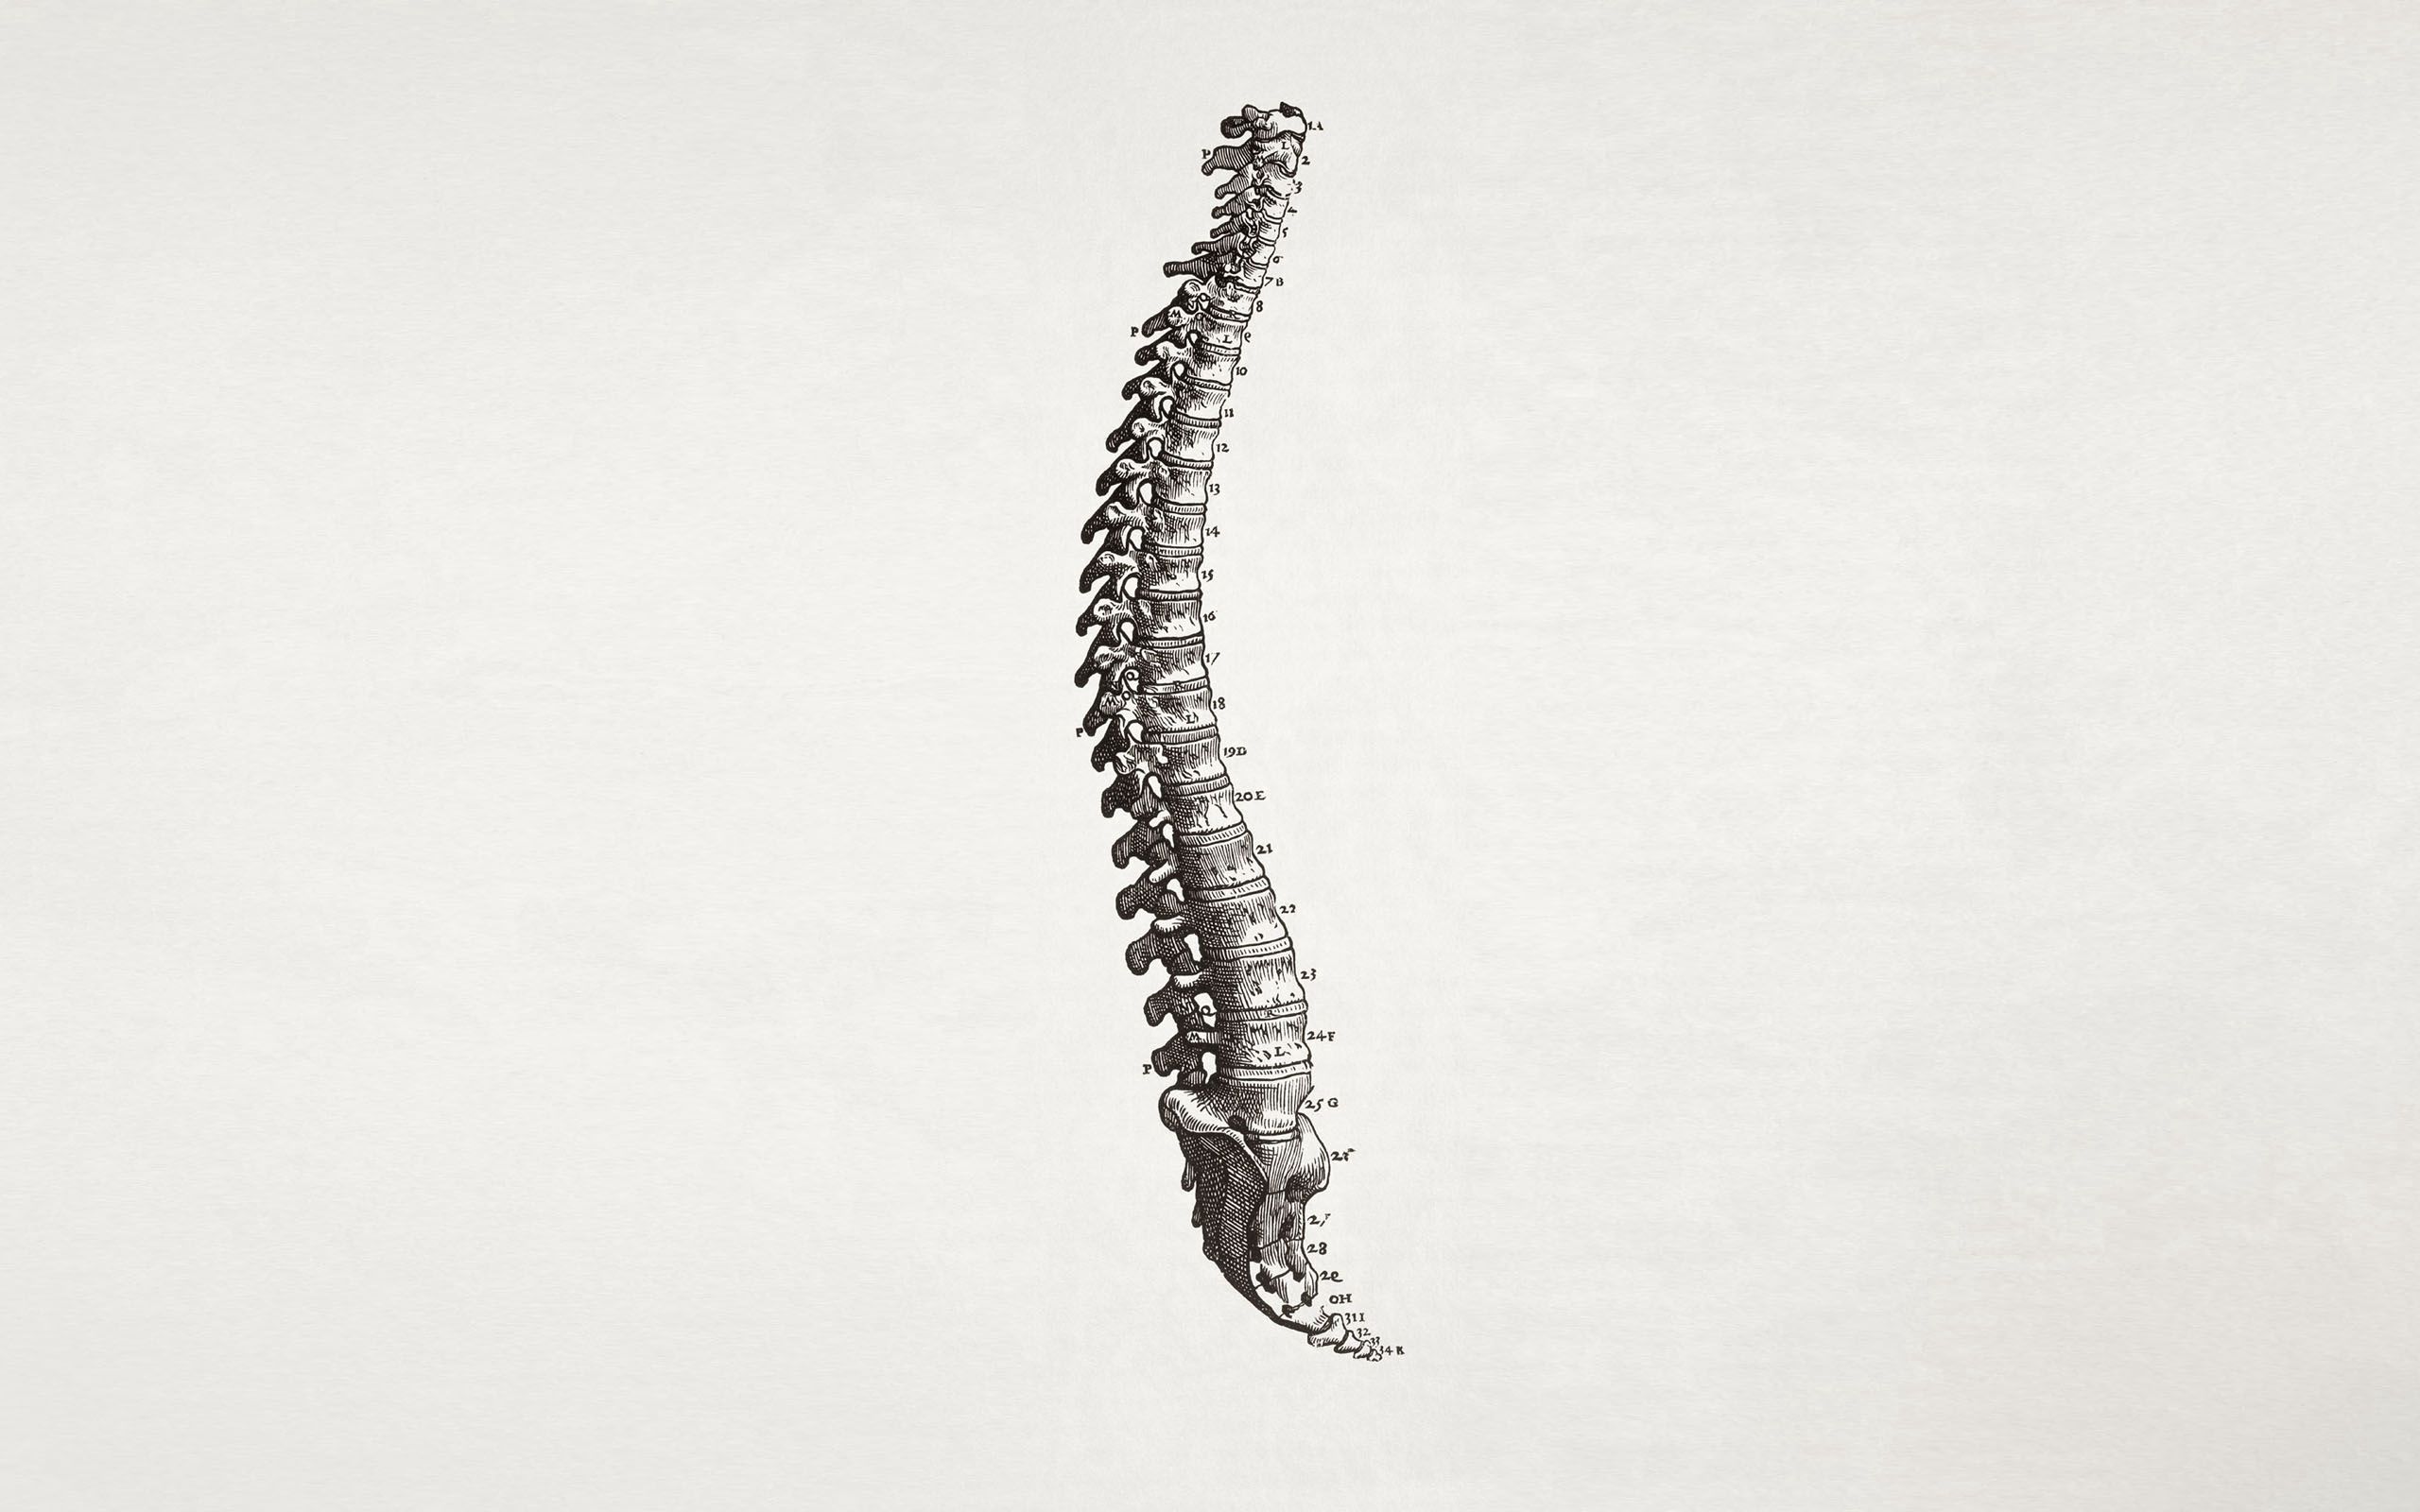 spine, numbers, bones, minimalism download for free